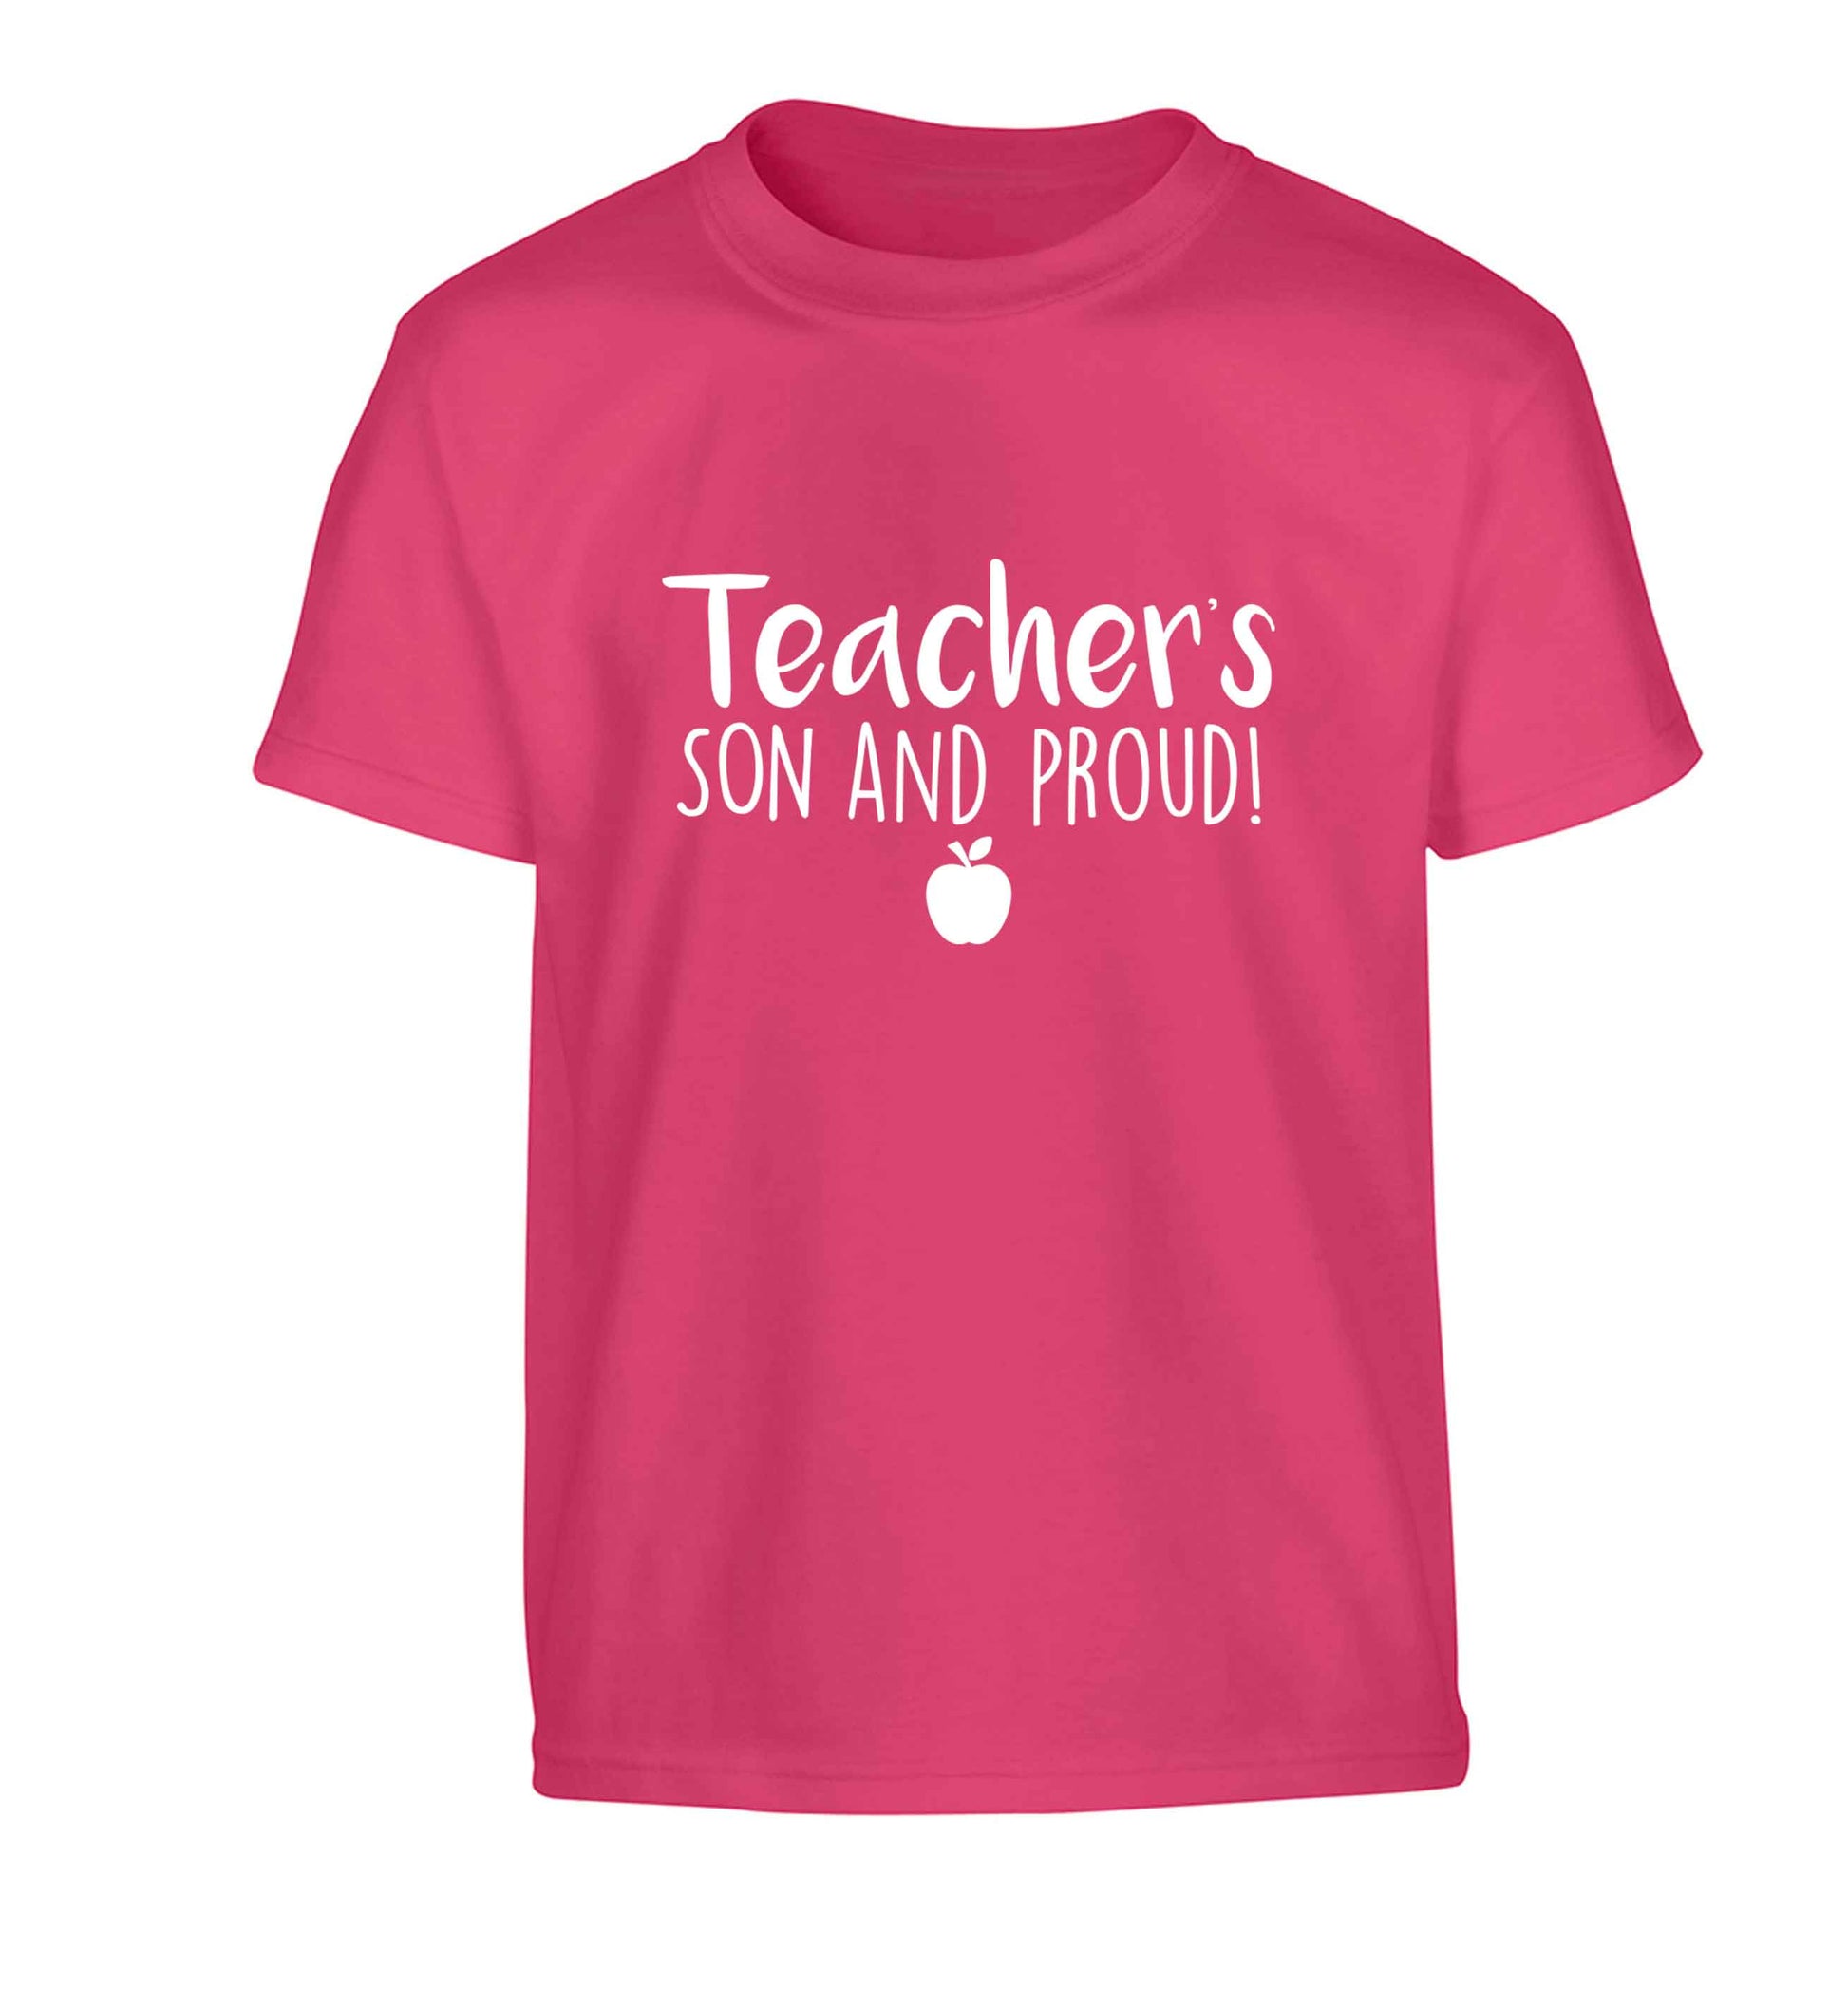 Teachers son and proud Children's pink Tshirt 12-13 Years